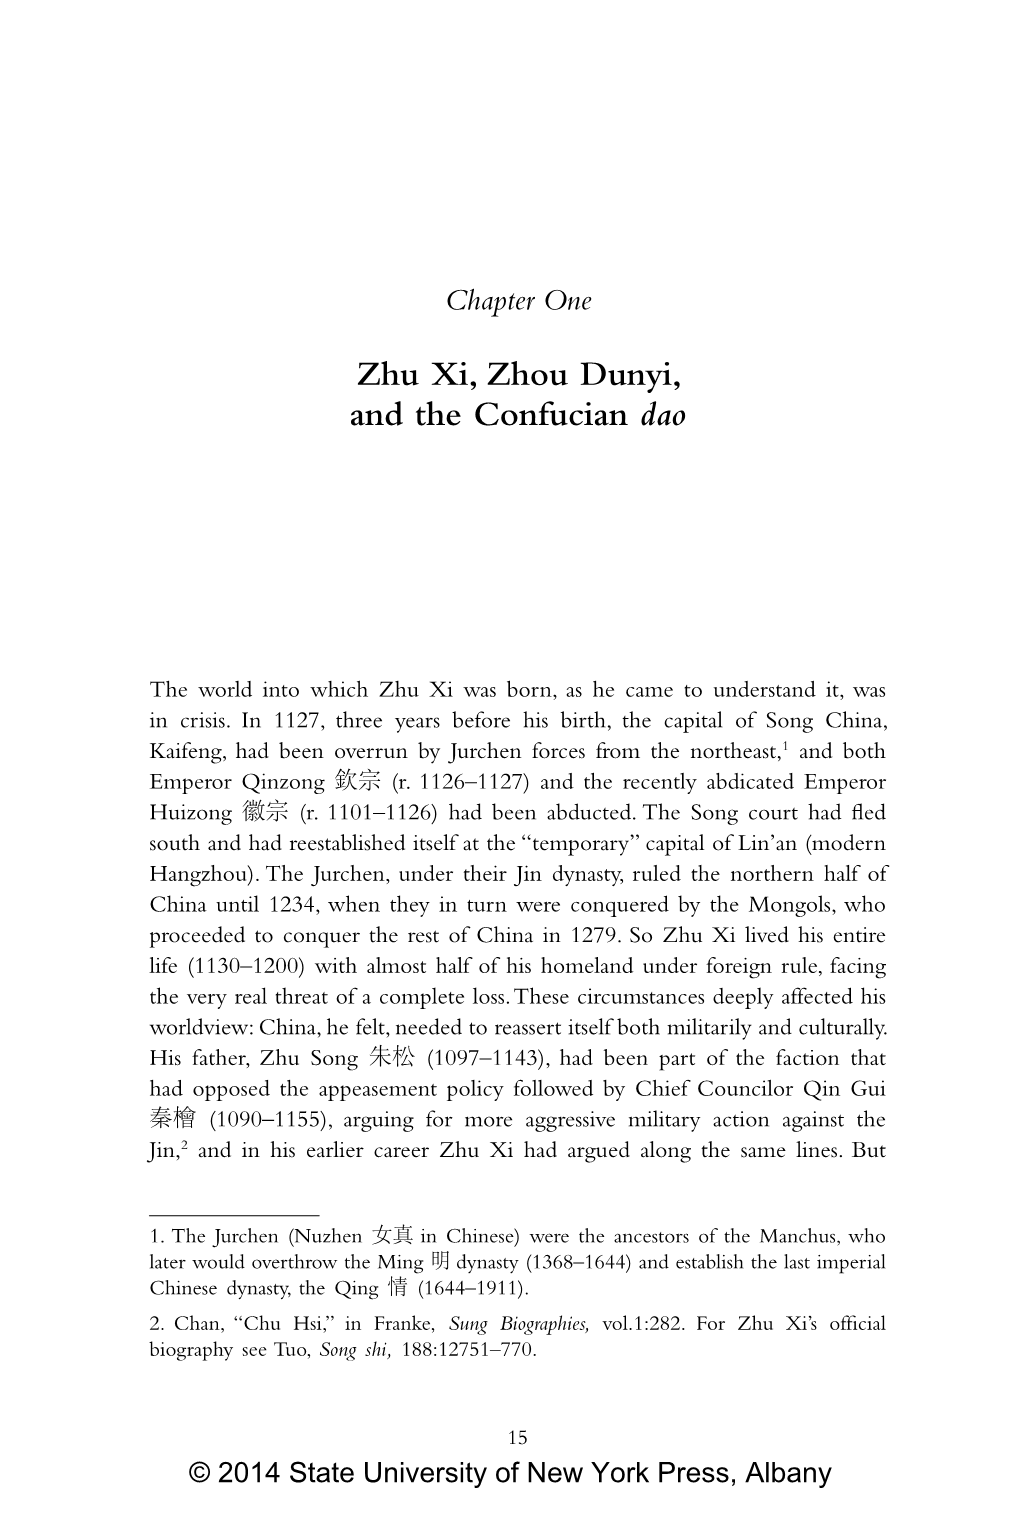 Reconstructing the Confucian